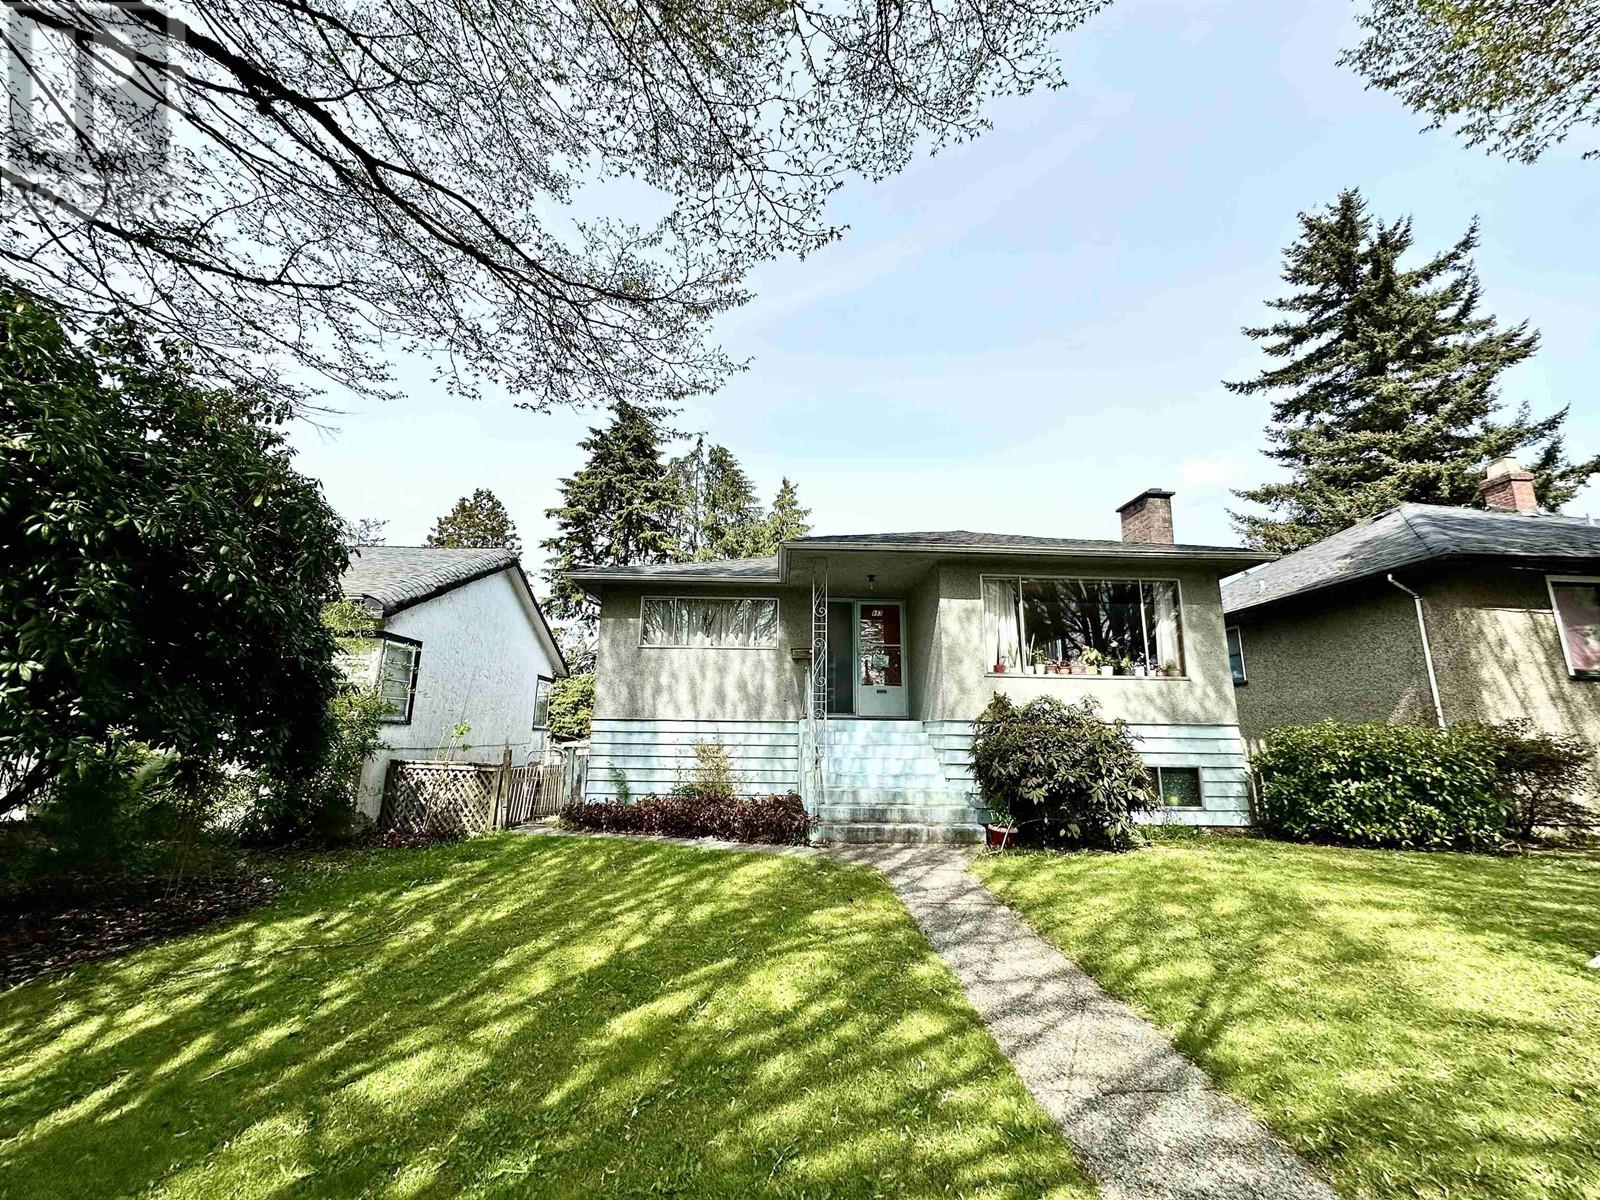 7 Bedroom Residential Home For Sale | 883 E 33rd Avenue | Vancouver | V5V3A4